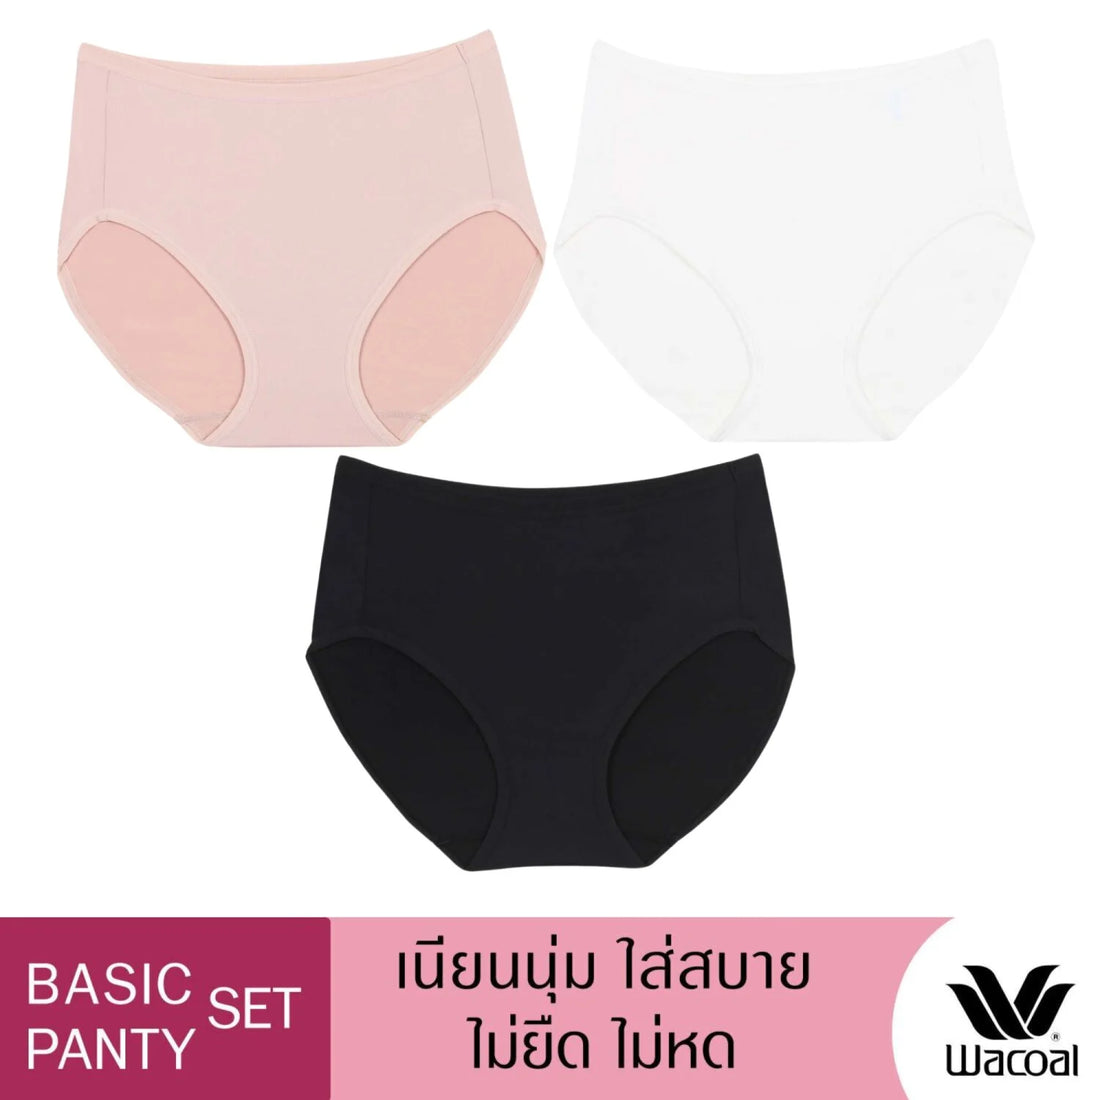 Wacoal Panty pack กางเกงในใส่สบาย รูปแบบเต็มตัว set 3 ชิ้น รุ่น WU4T34 คละสี (สีเบจ-สีดำ-สีครีม)